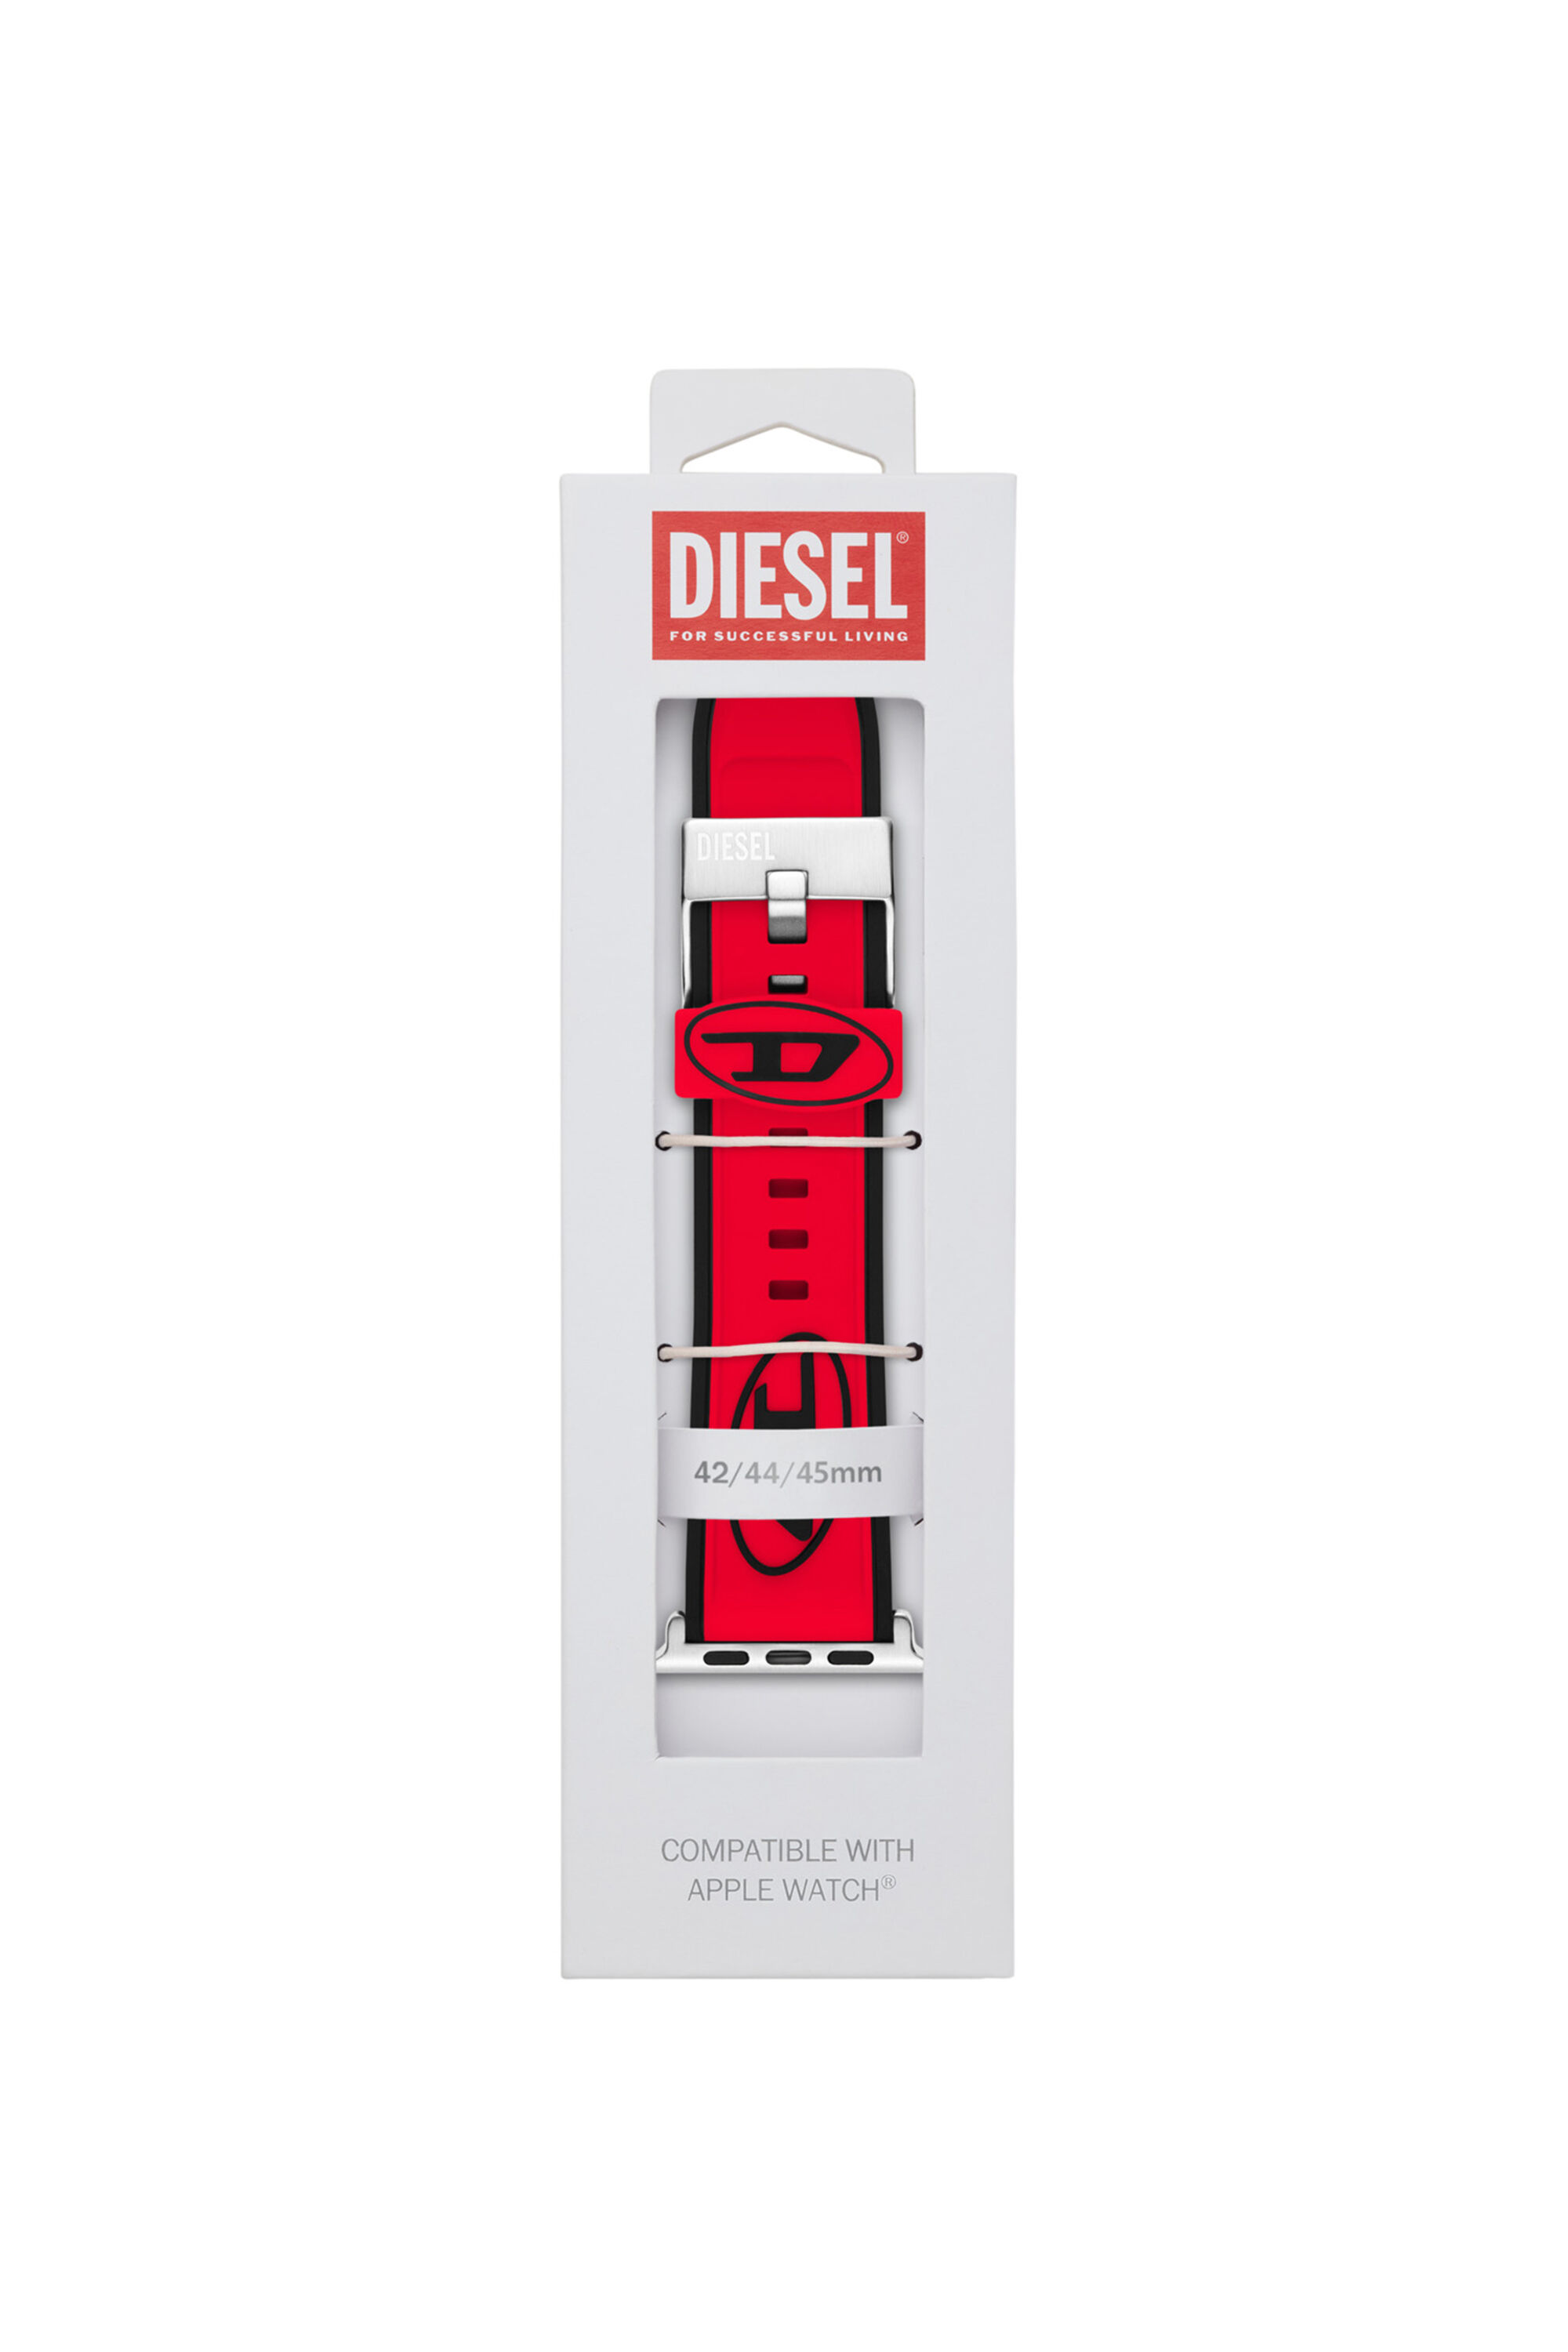 Diesel - DSS010, レッド - Image 2